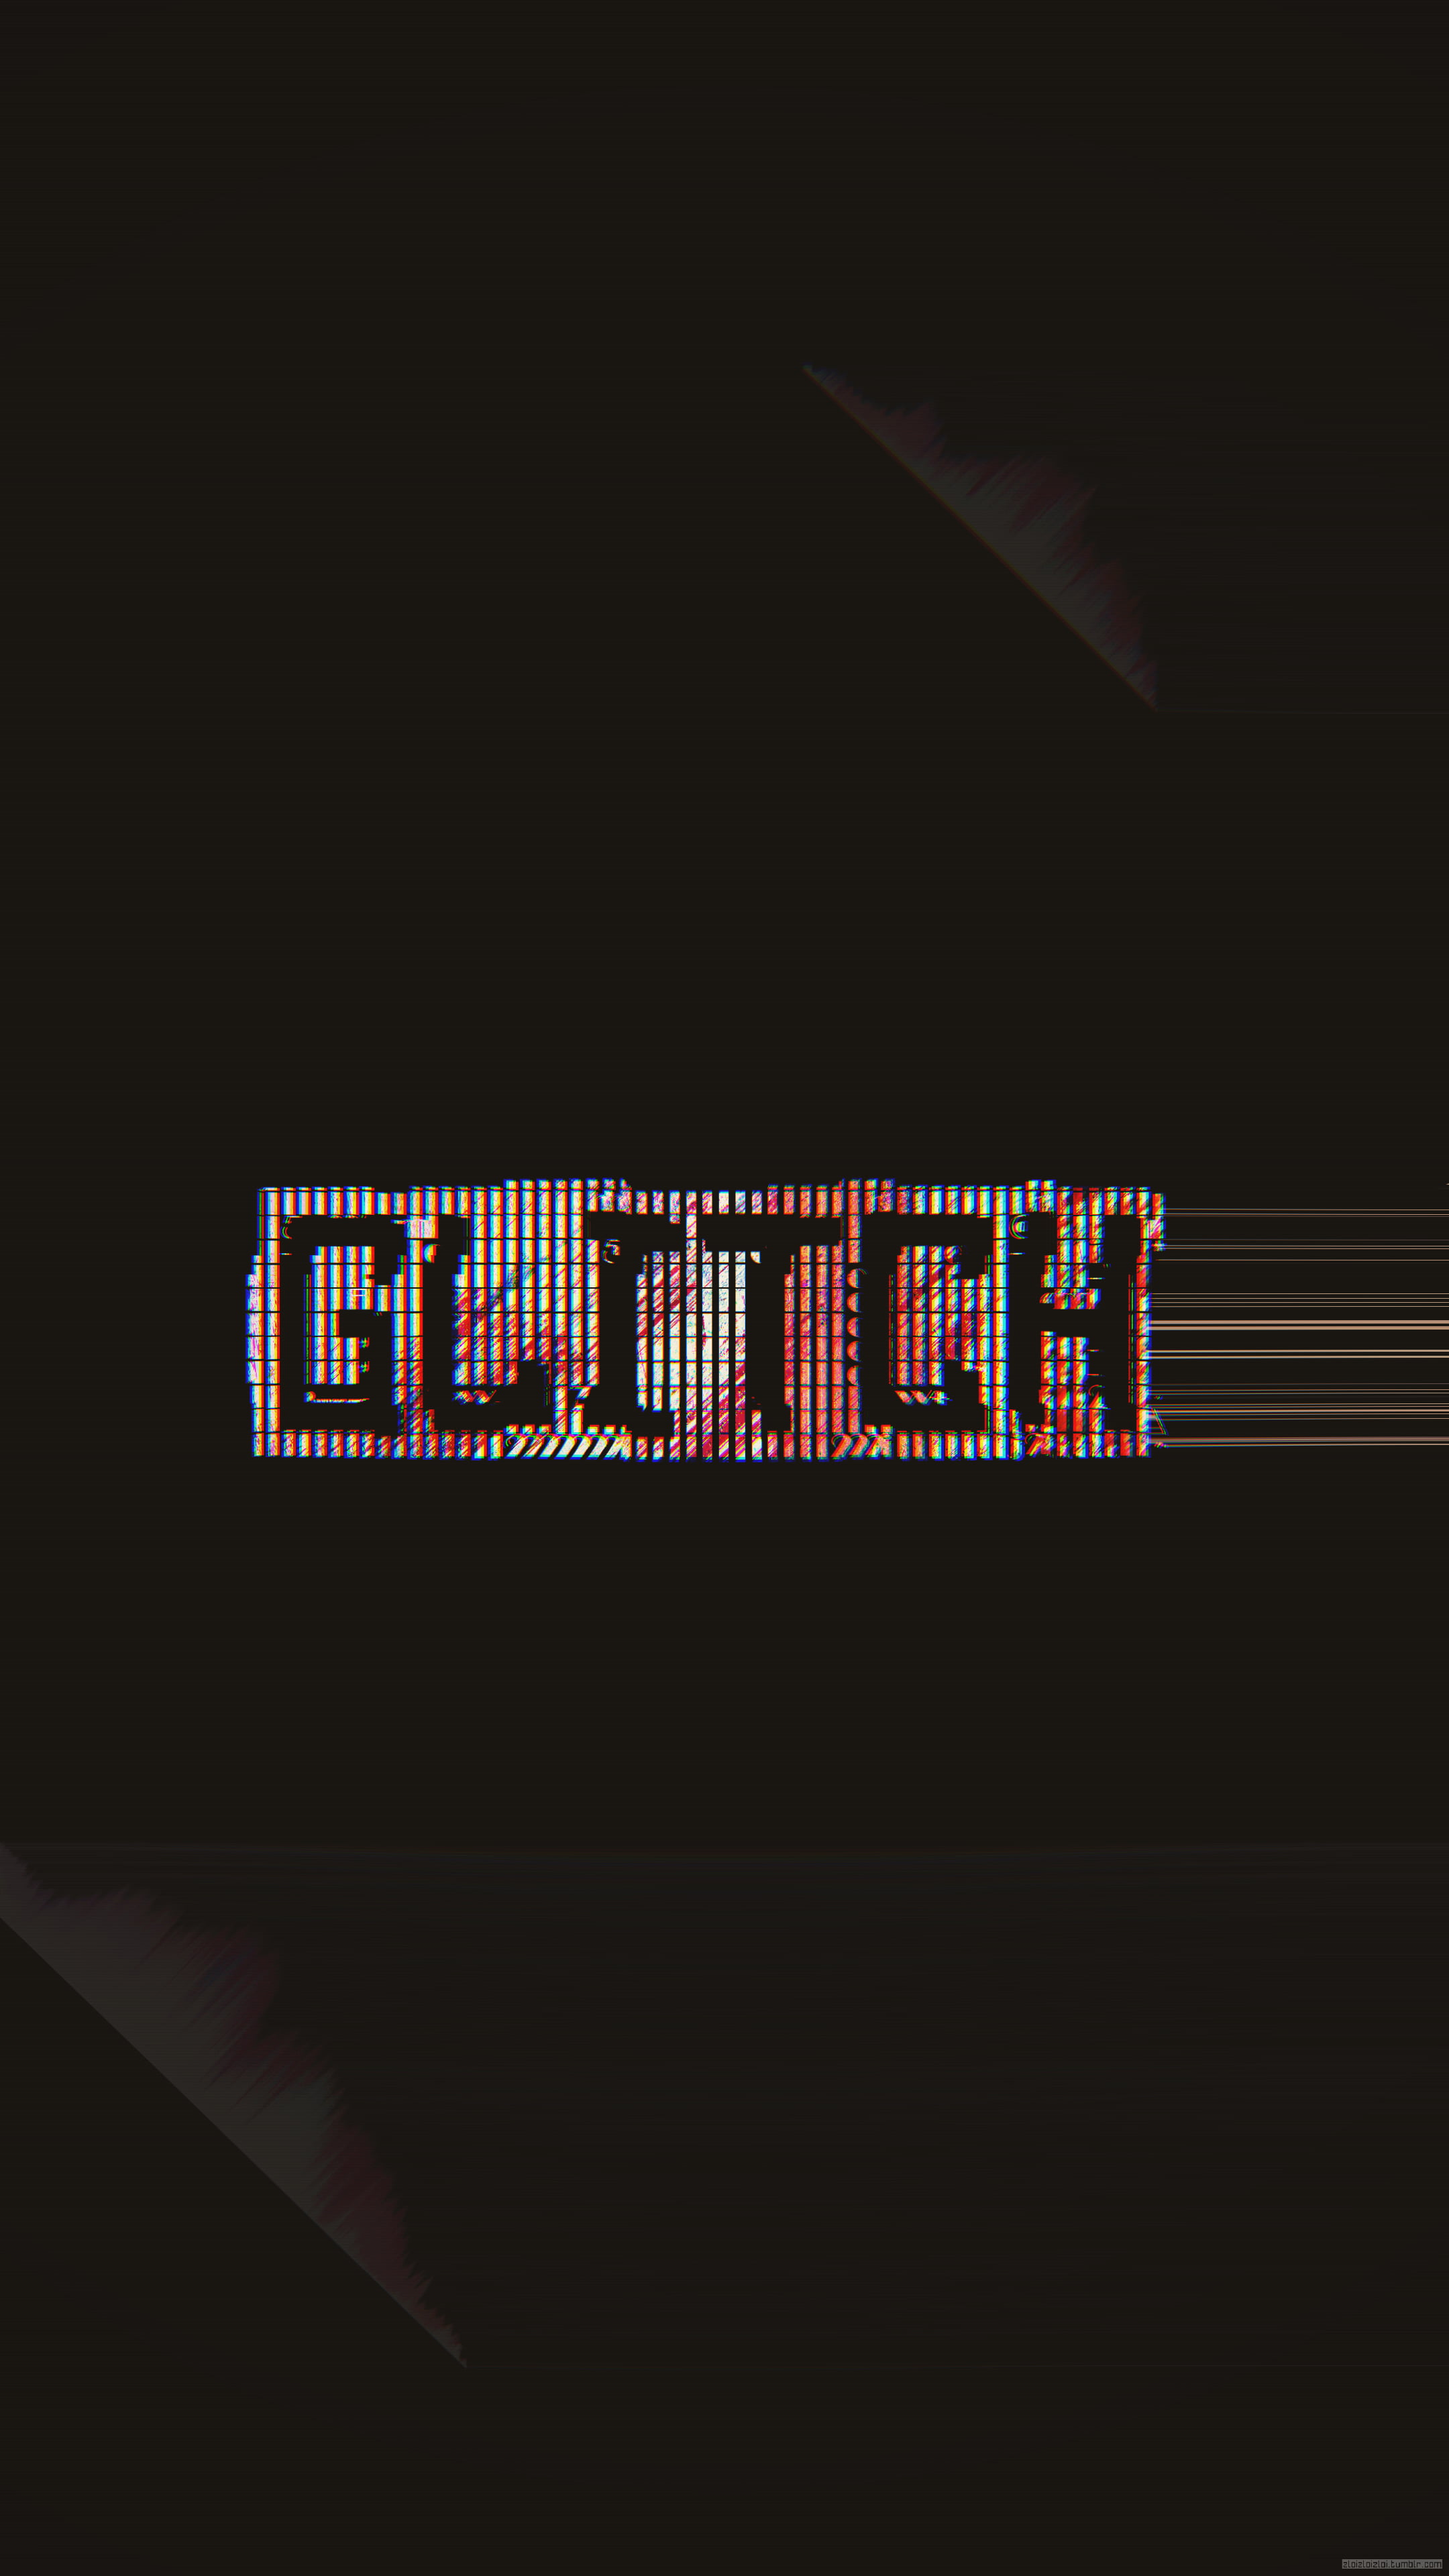 Glitch text on black background, glitch art, abstract, ASCII art